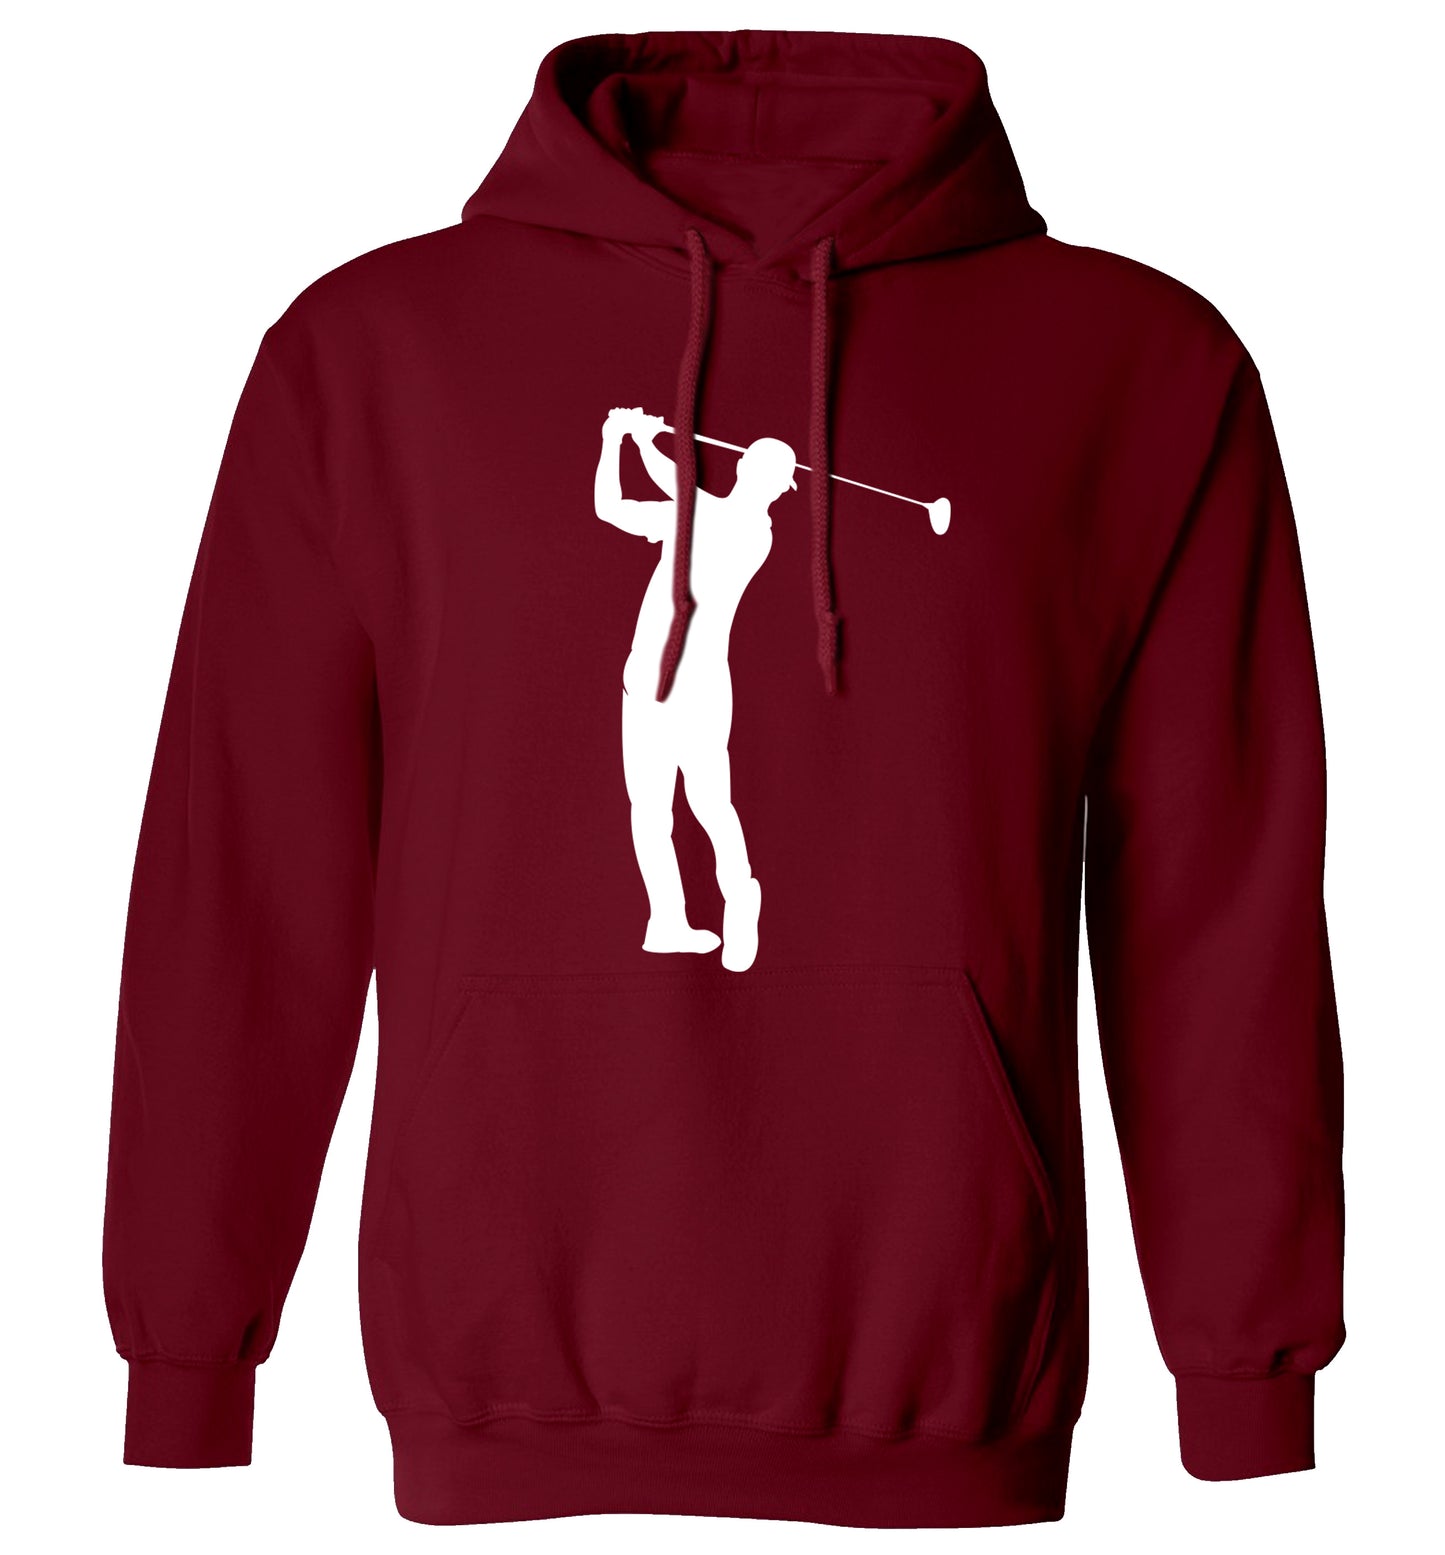 Golfer Illustration adults unisex maroon hoodie 2XL